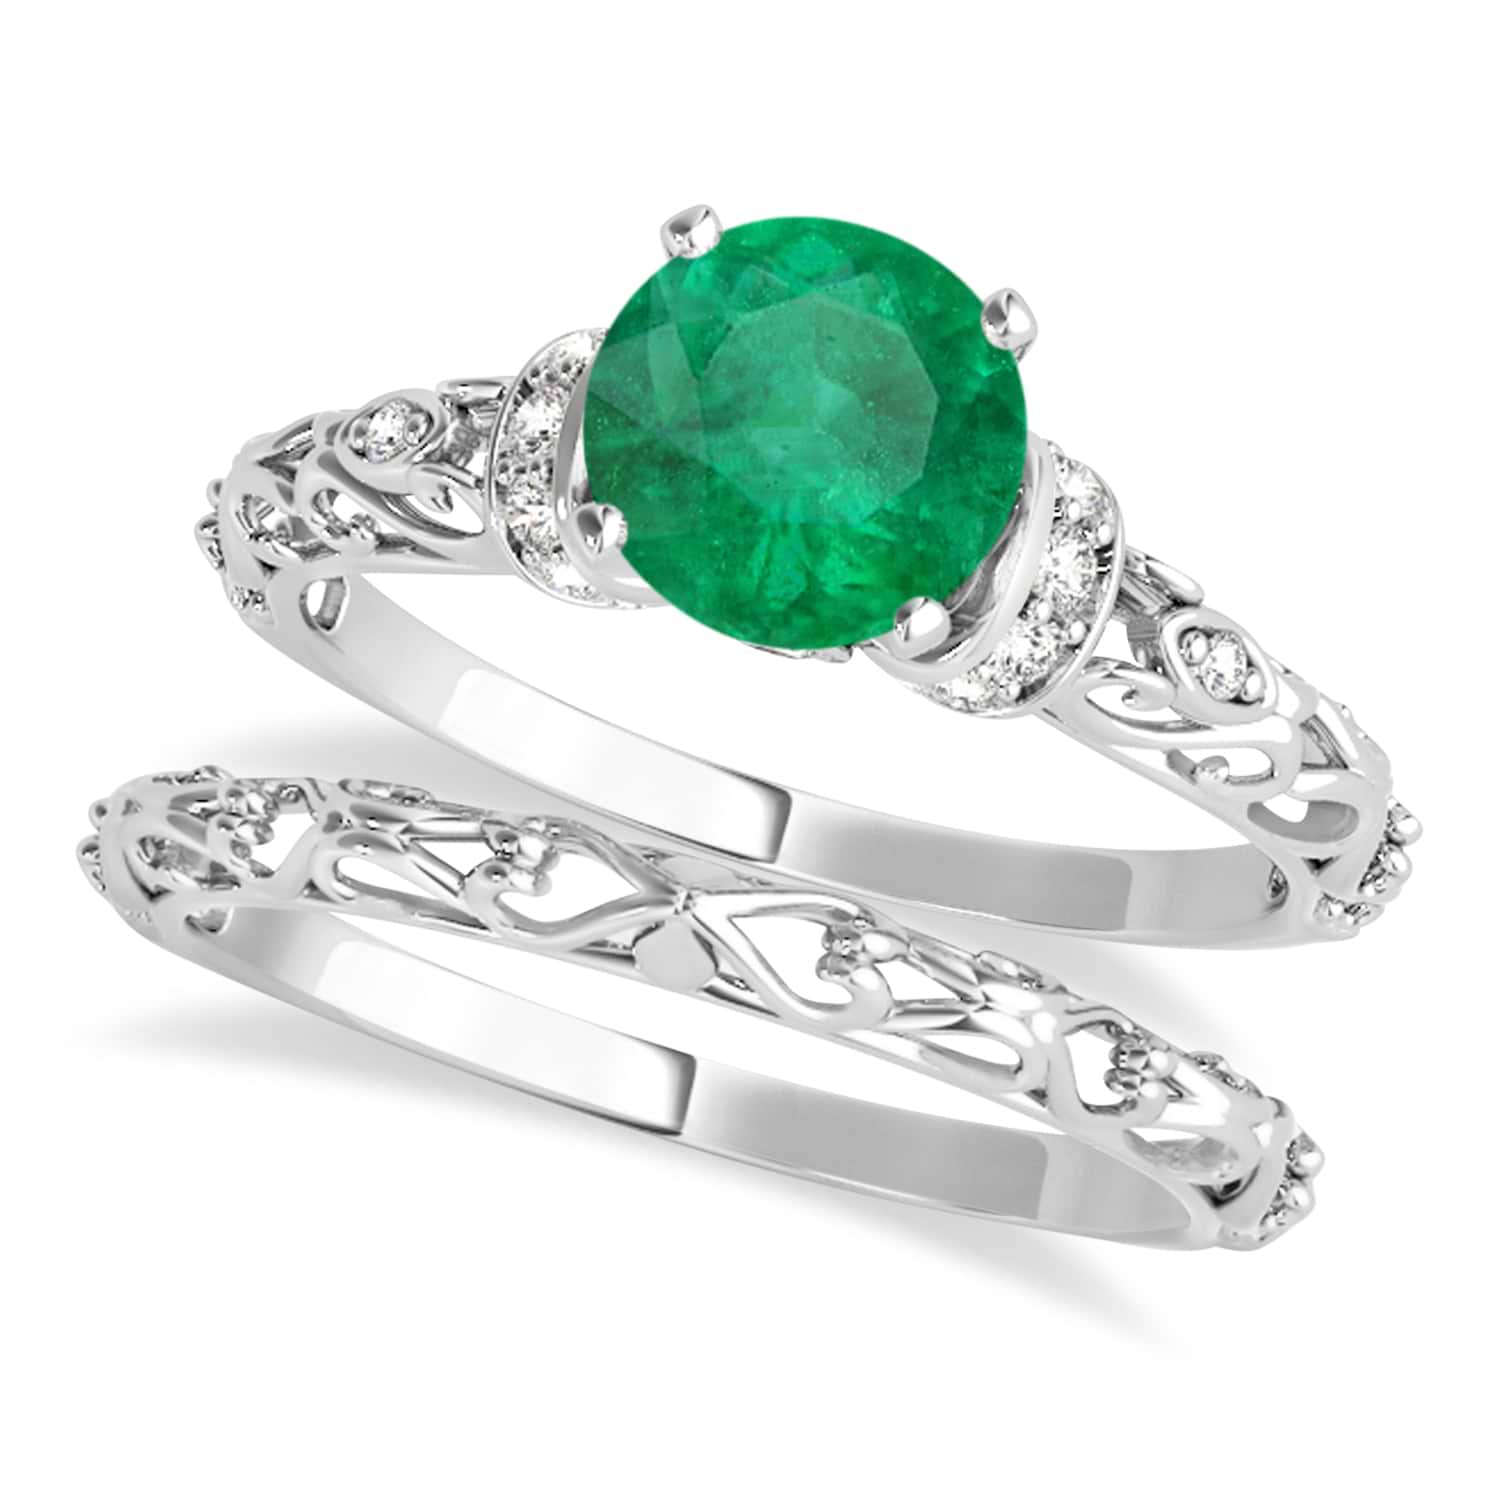 Emerald & Diamond Antique Style Bridal Set Palladium (1.62ct)